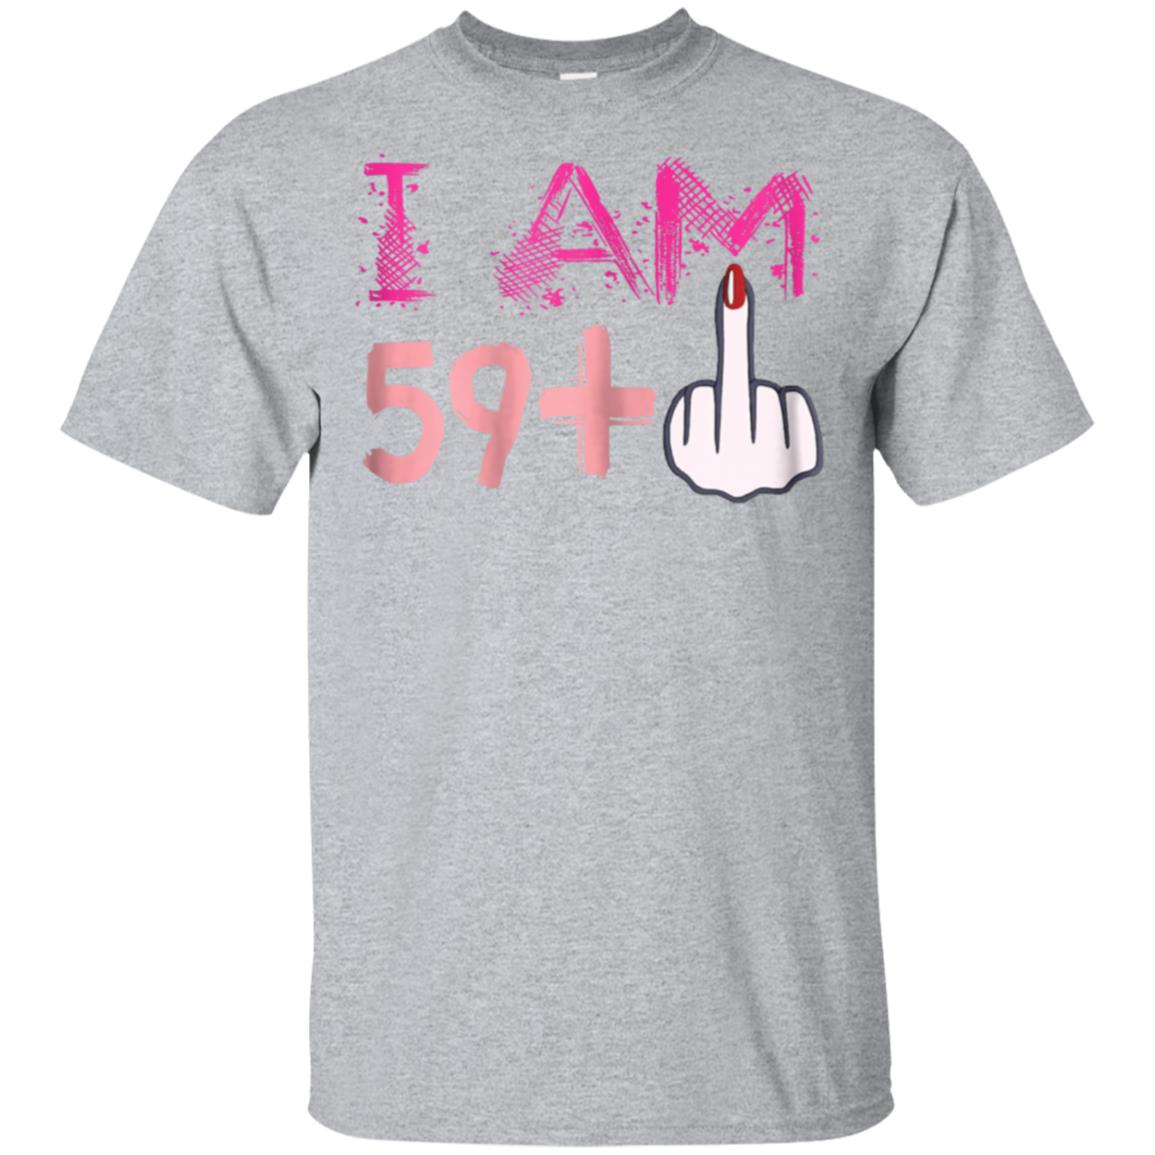 Womens 60th birthday Gift ideas Funny T shirt